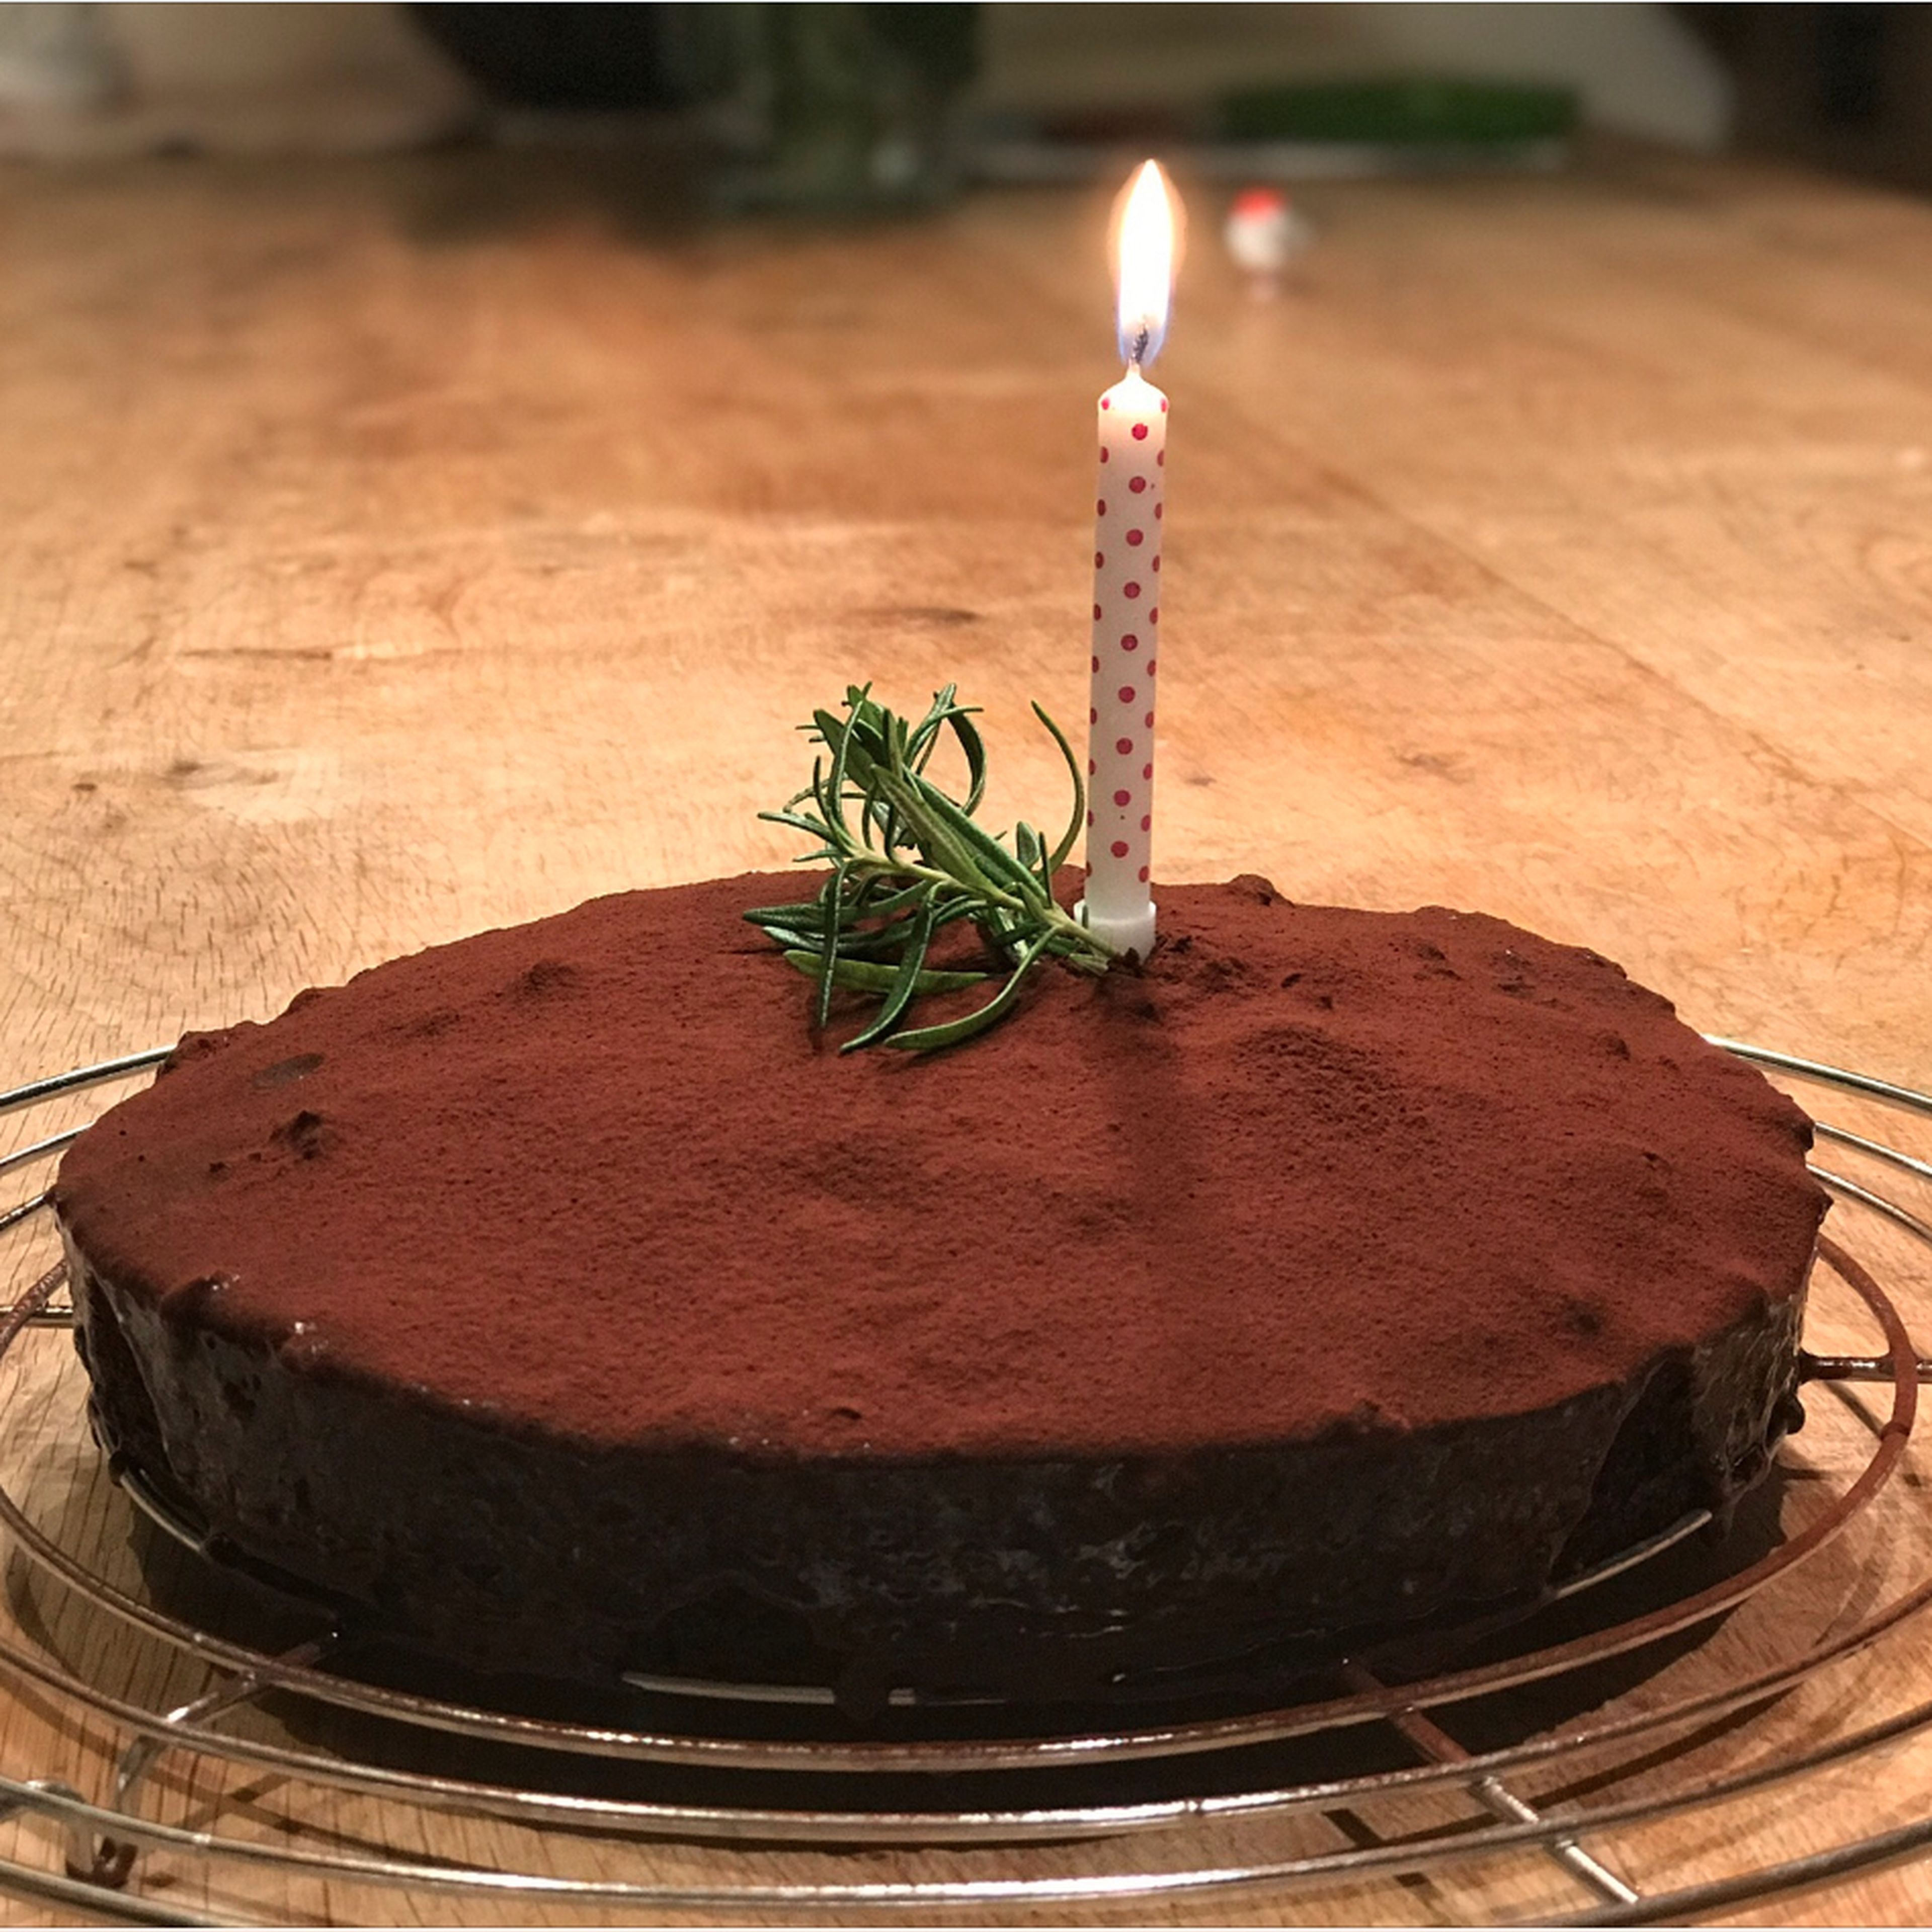 Double chocolate beetroot cake